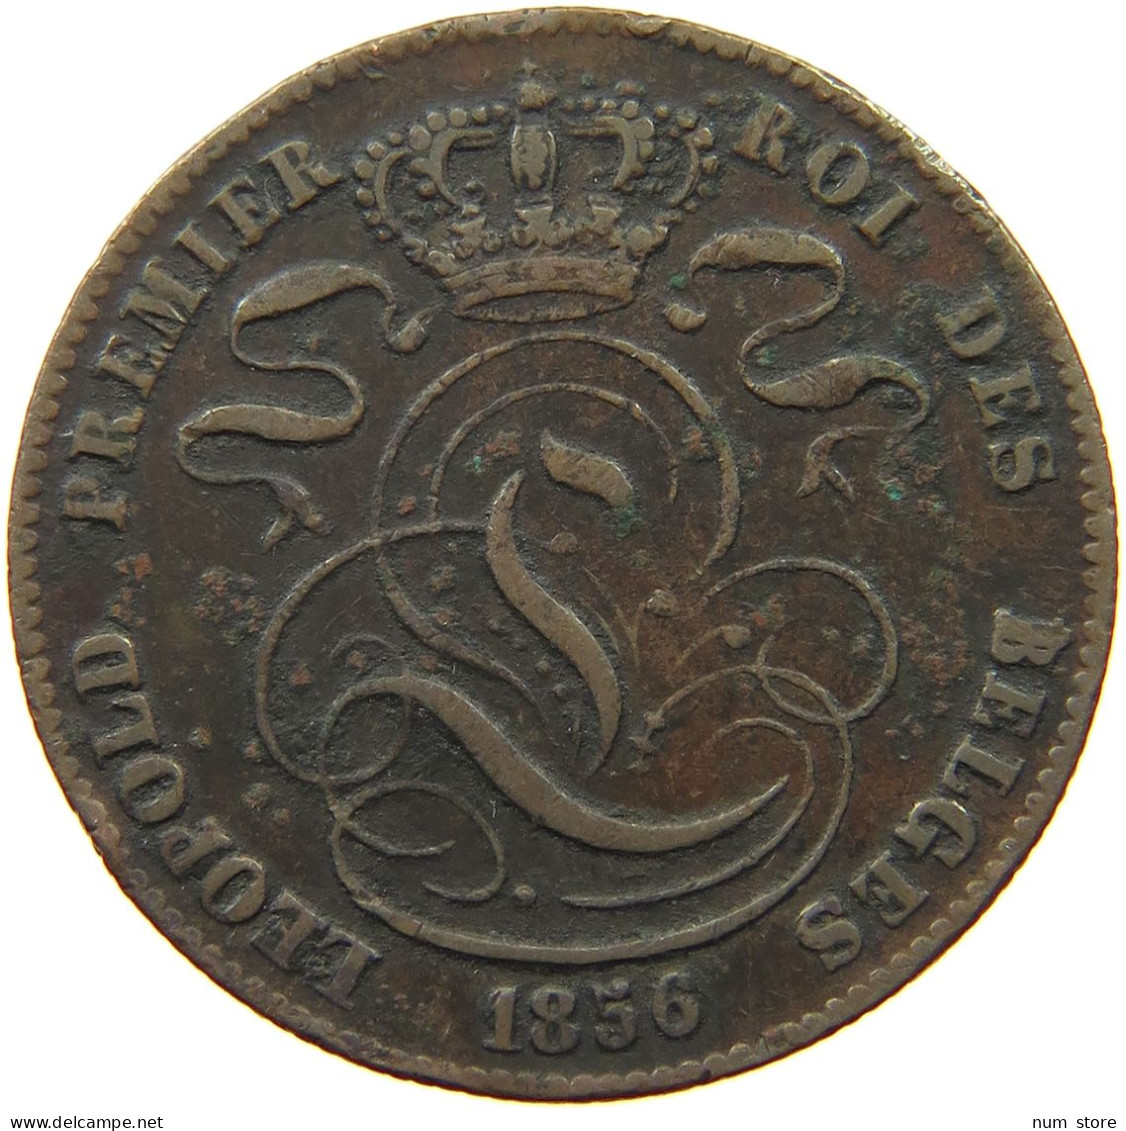 BELGIUM 5 CENTIMES 1856 Leopold I. (1831-1865) #s046 0419 - 5 Cents